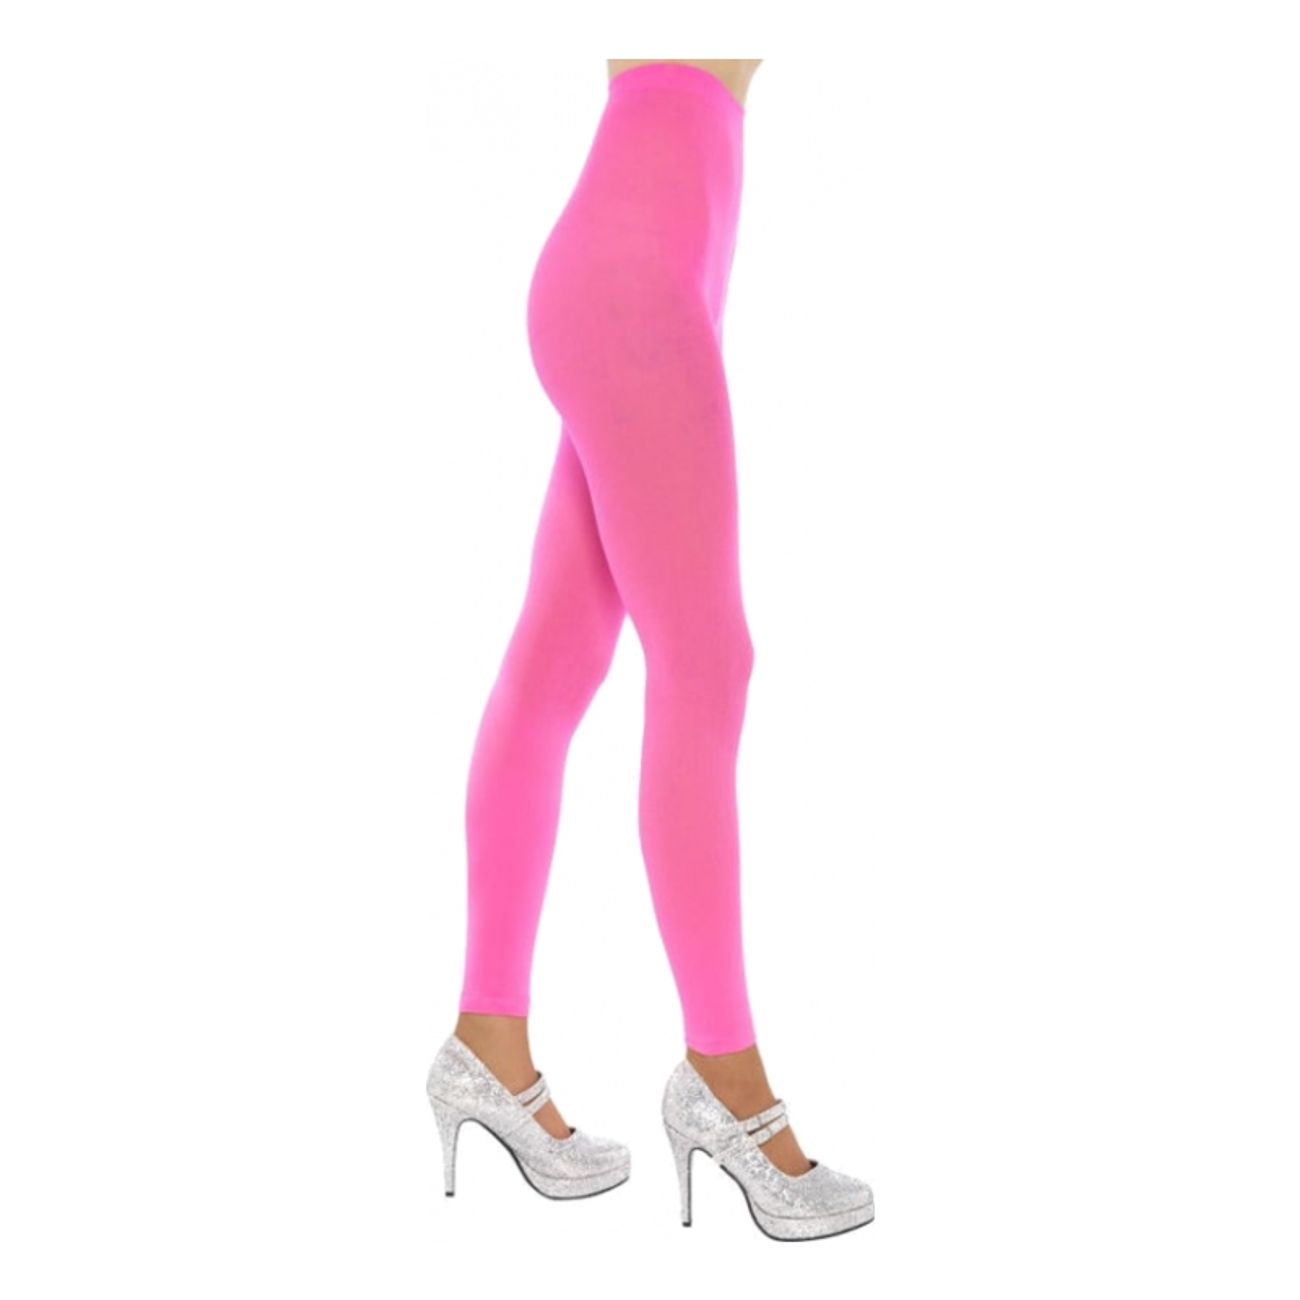 footless-tights-pink-1